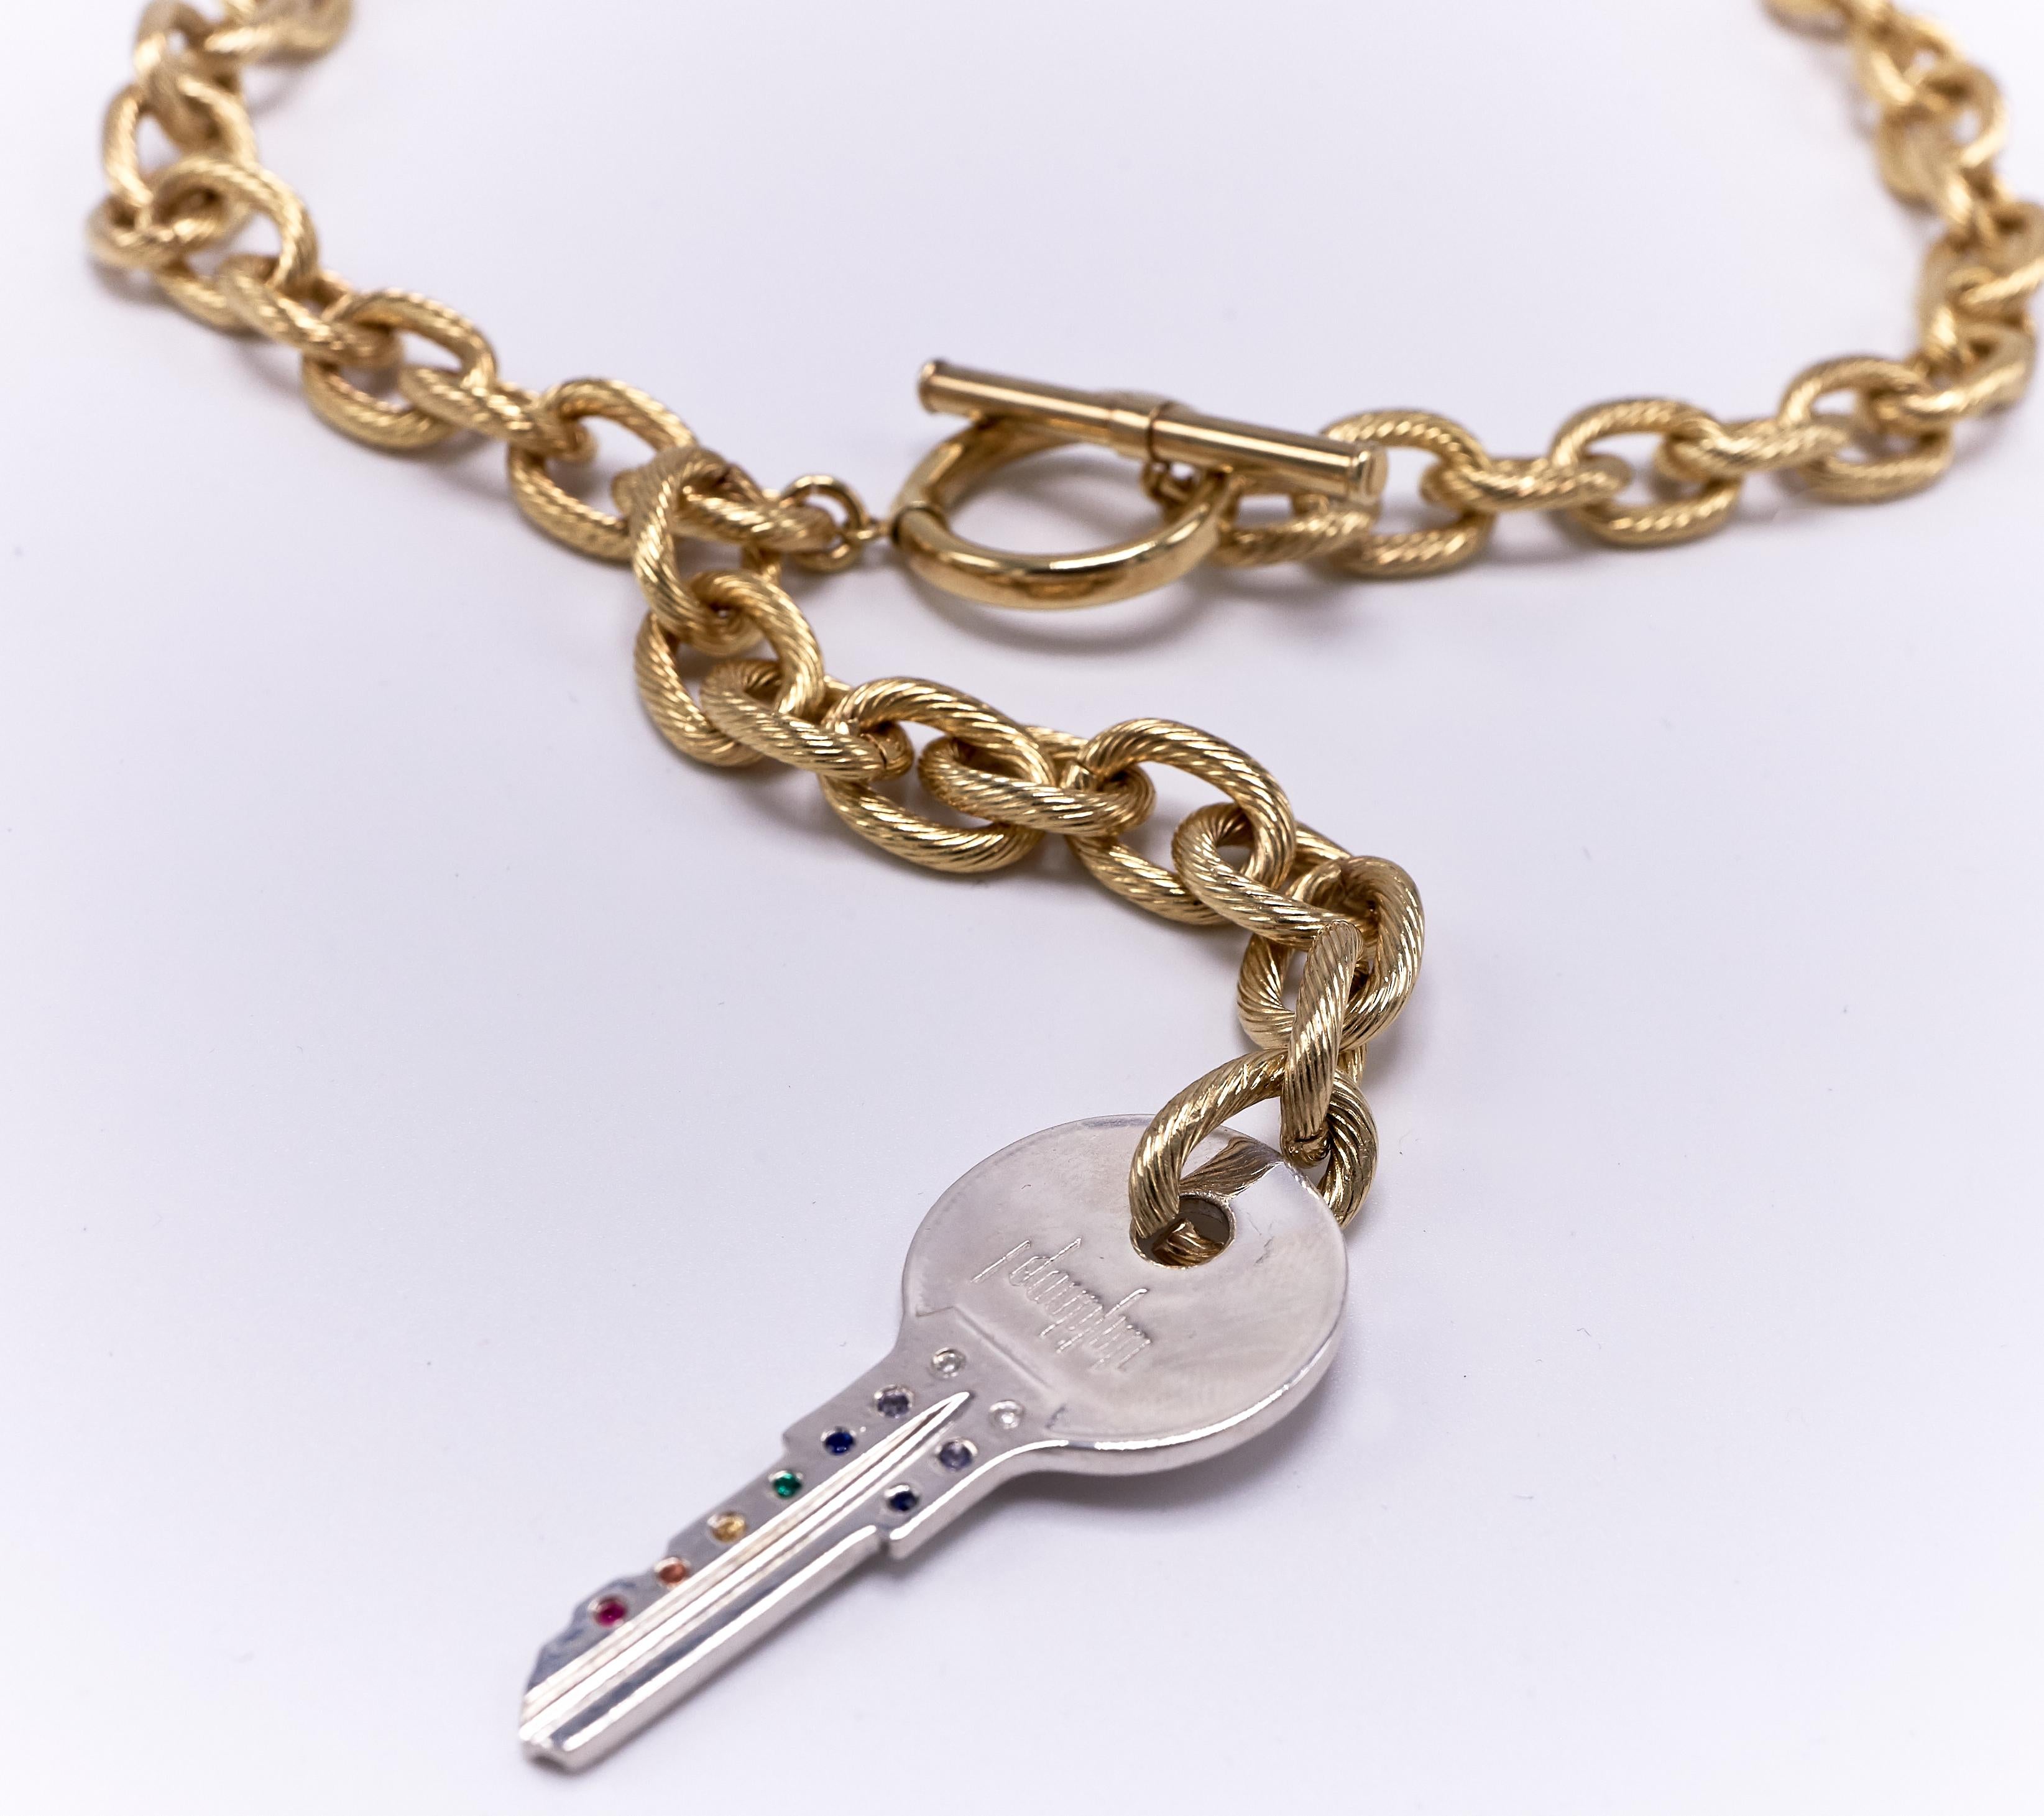 Rainbow Key Chunky Chain Chain Necklace Chakra Silver Key White Diamond Emerald Ruby

J DAUPHIN necklace 